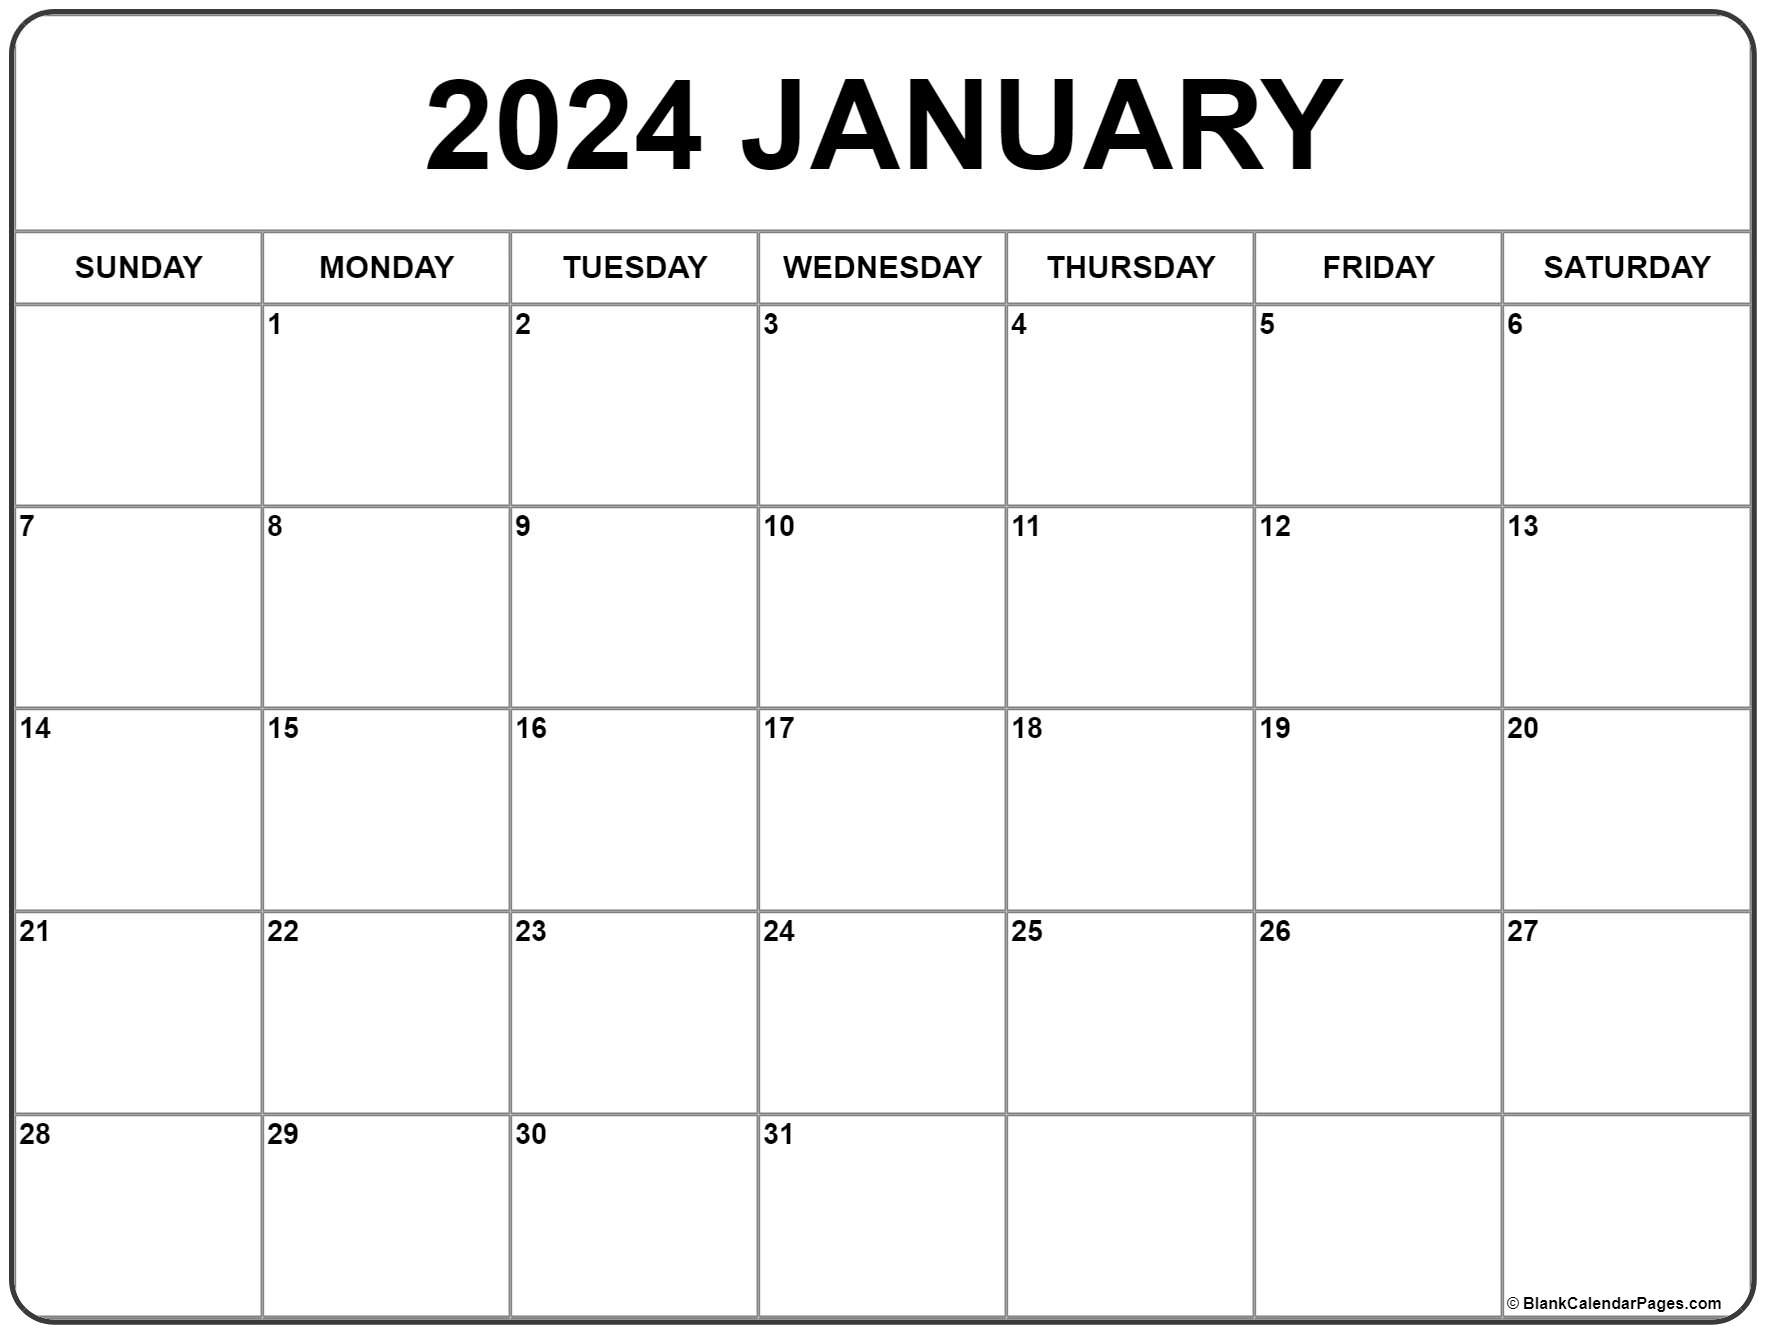 January 2024 Calendar | Free Printable Calendar for January 2024 Calendar Free Printable